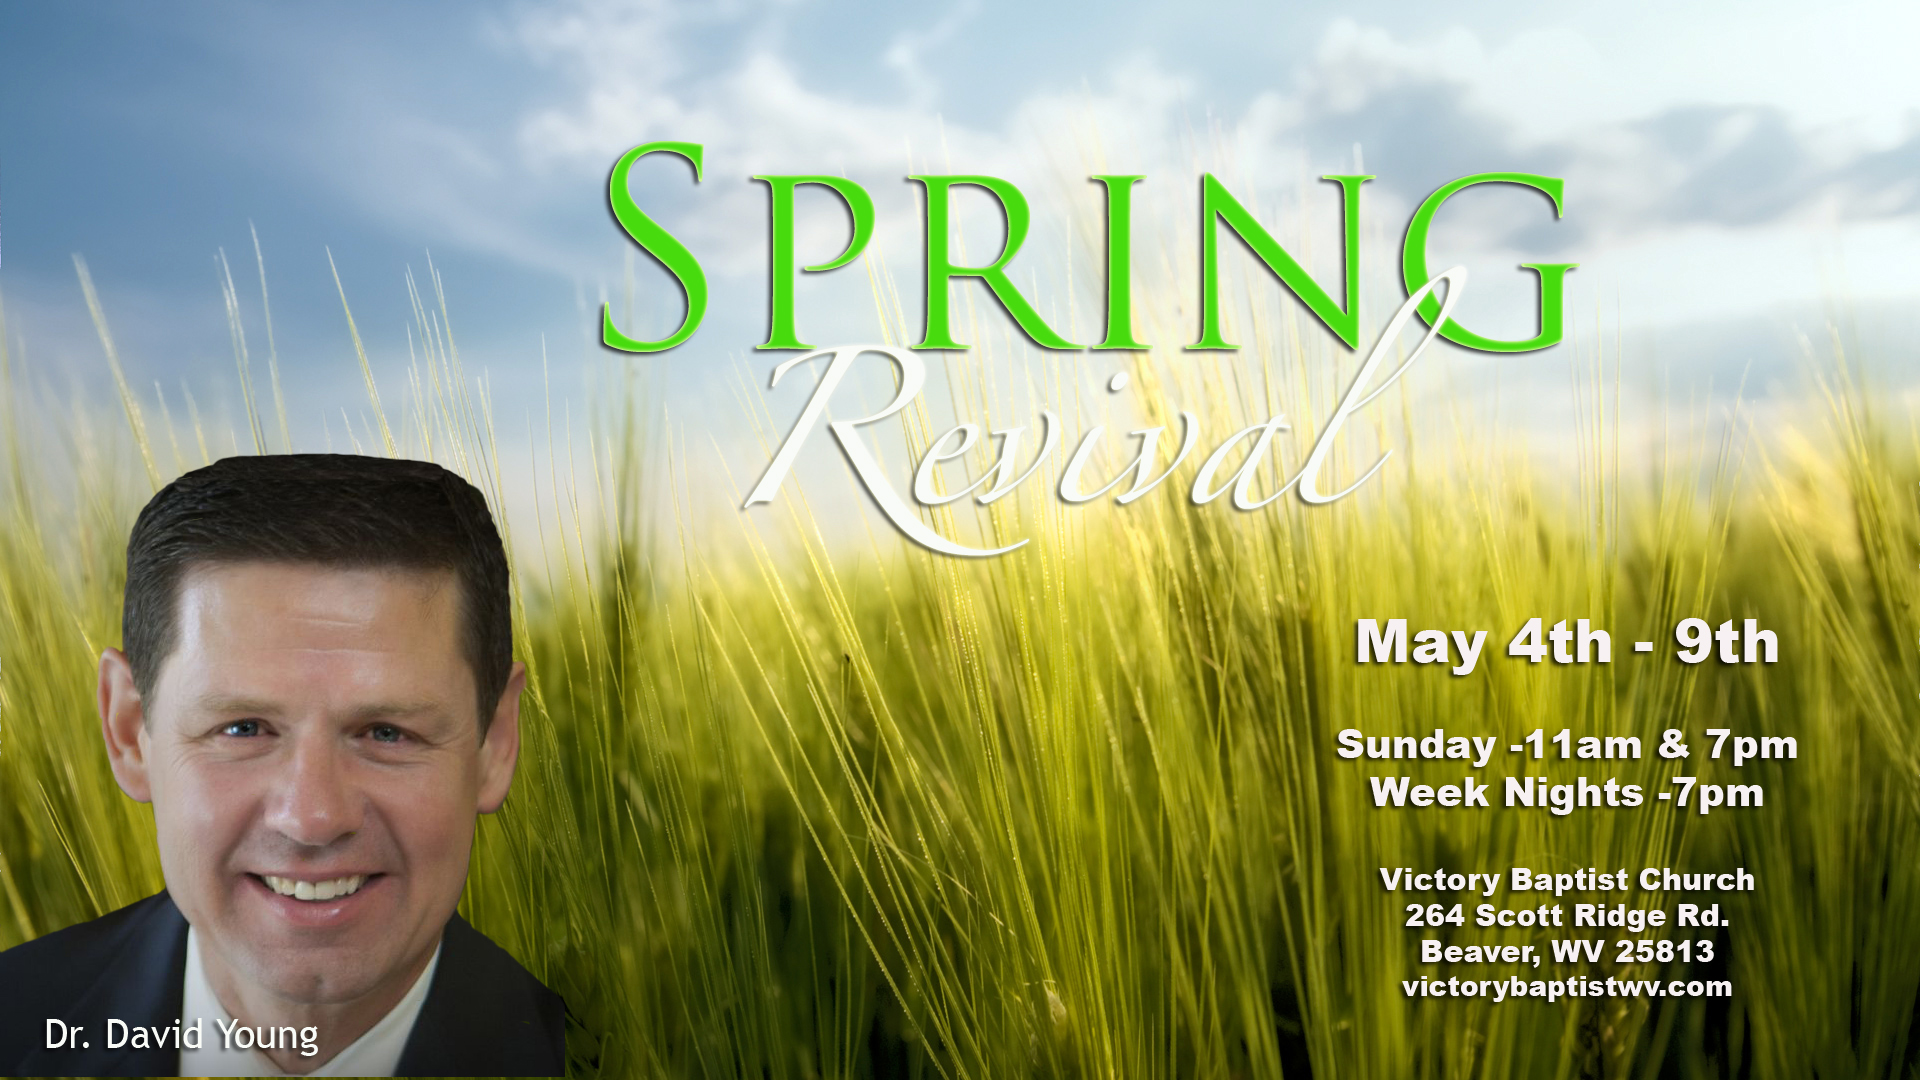 Spring Revival2014 – Victory Baptist Church